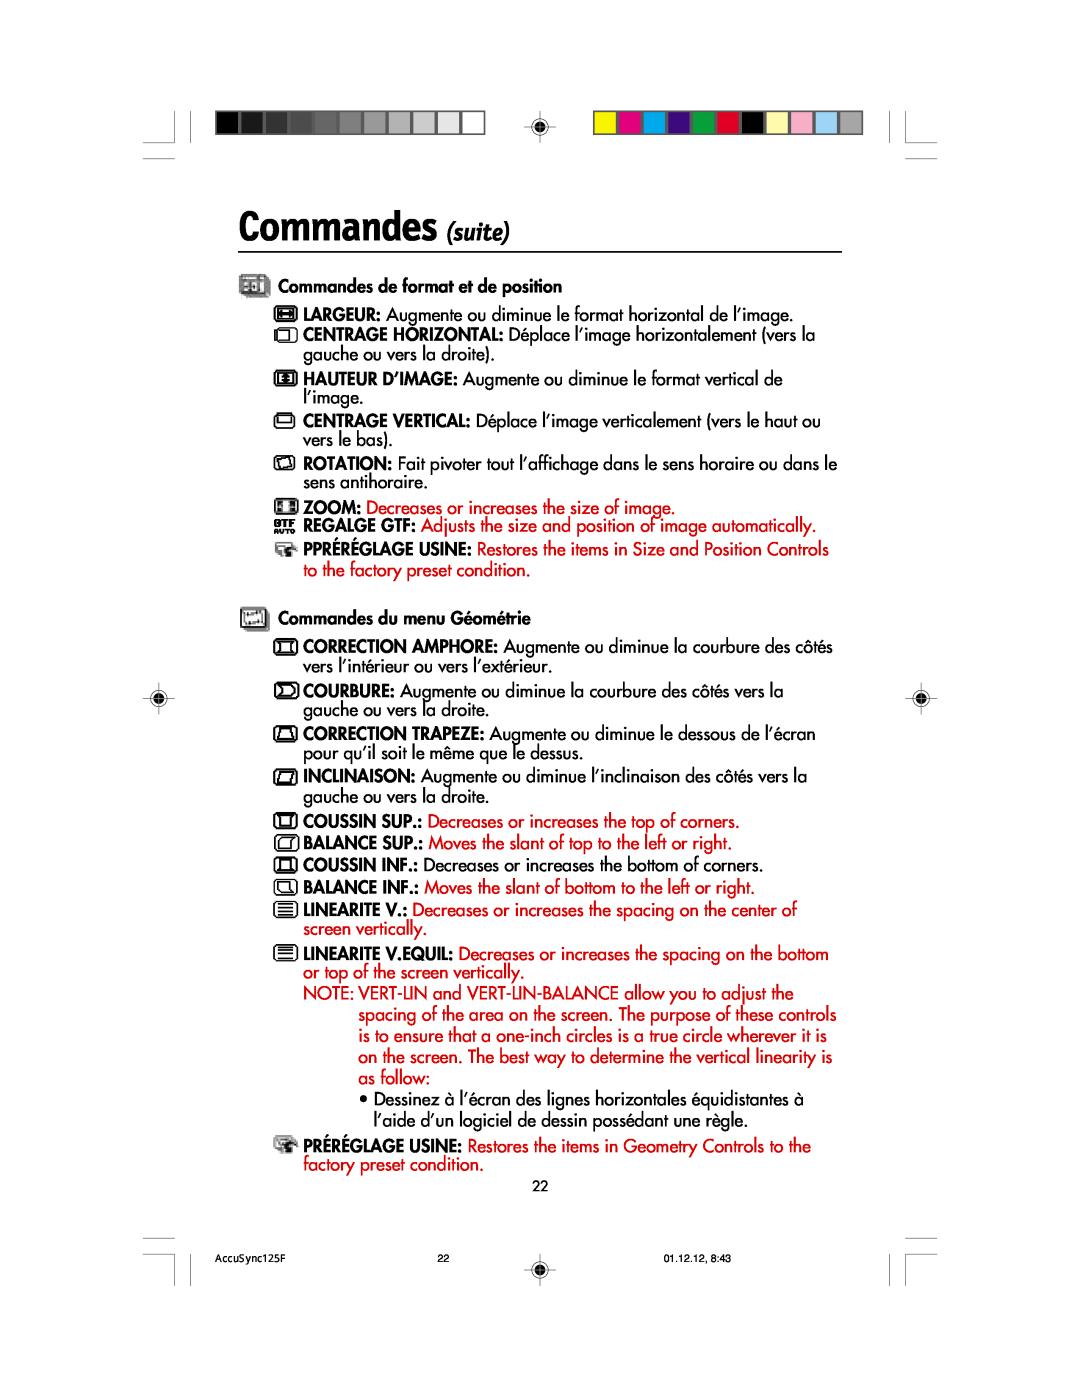 NEC 125F user manual Commandes suite 